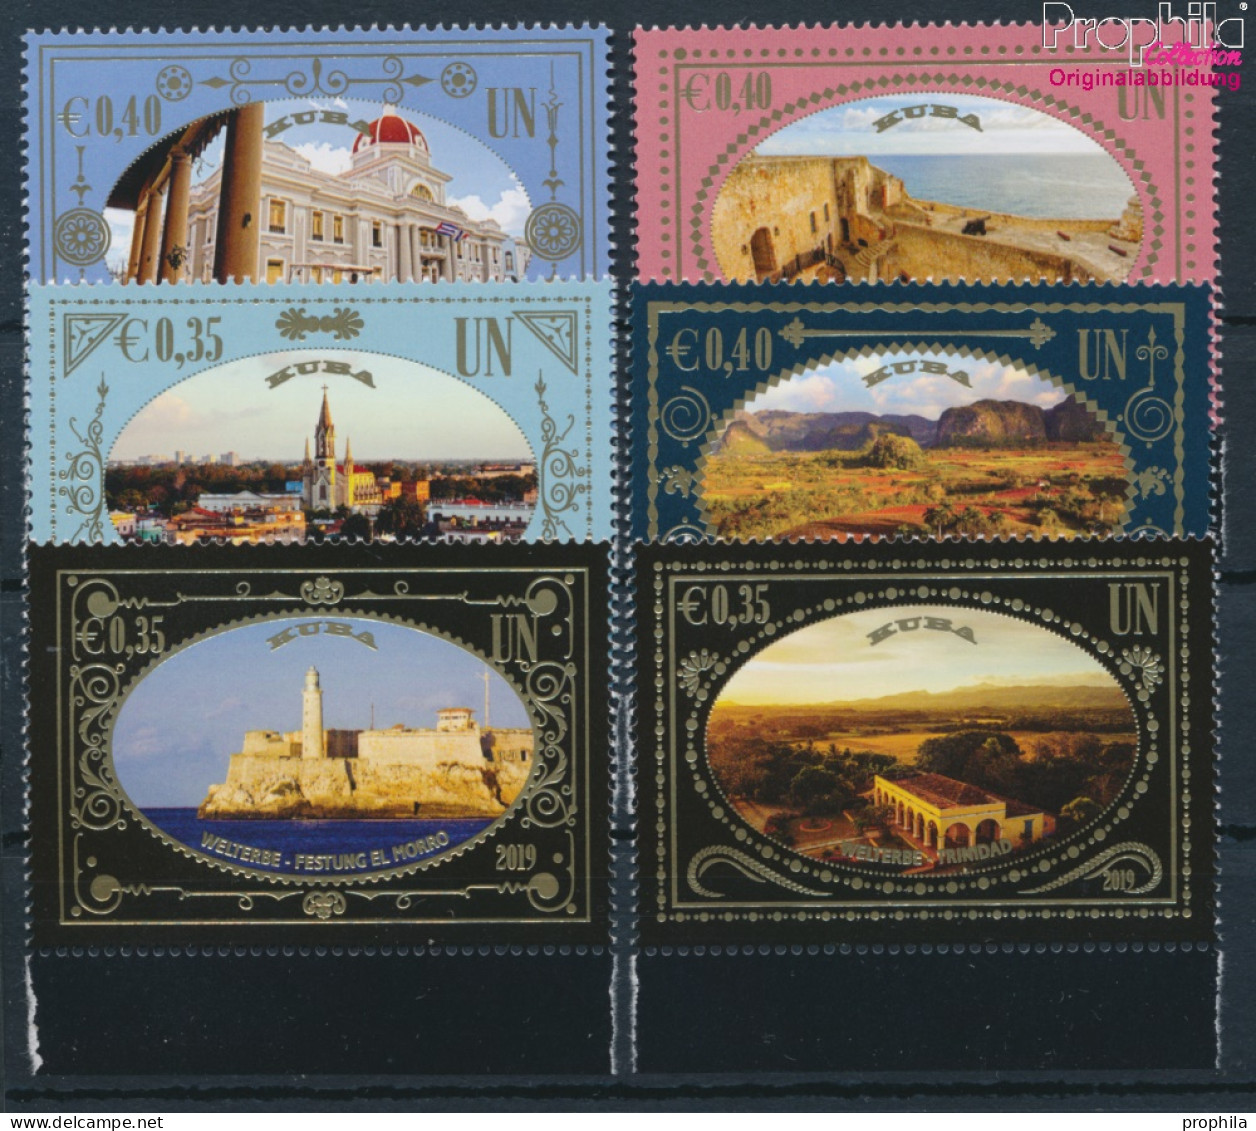 UNO - Wien 1072-1077 (kompl.Ausg.) Postfrisch 2019 UNESCO Welterbe Kuba (10193942 - Unused Stamps